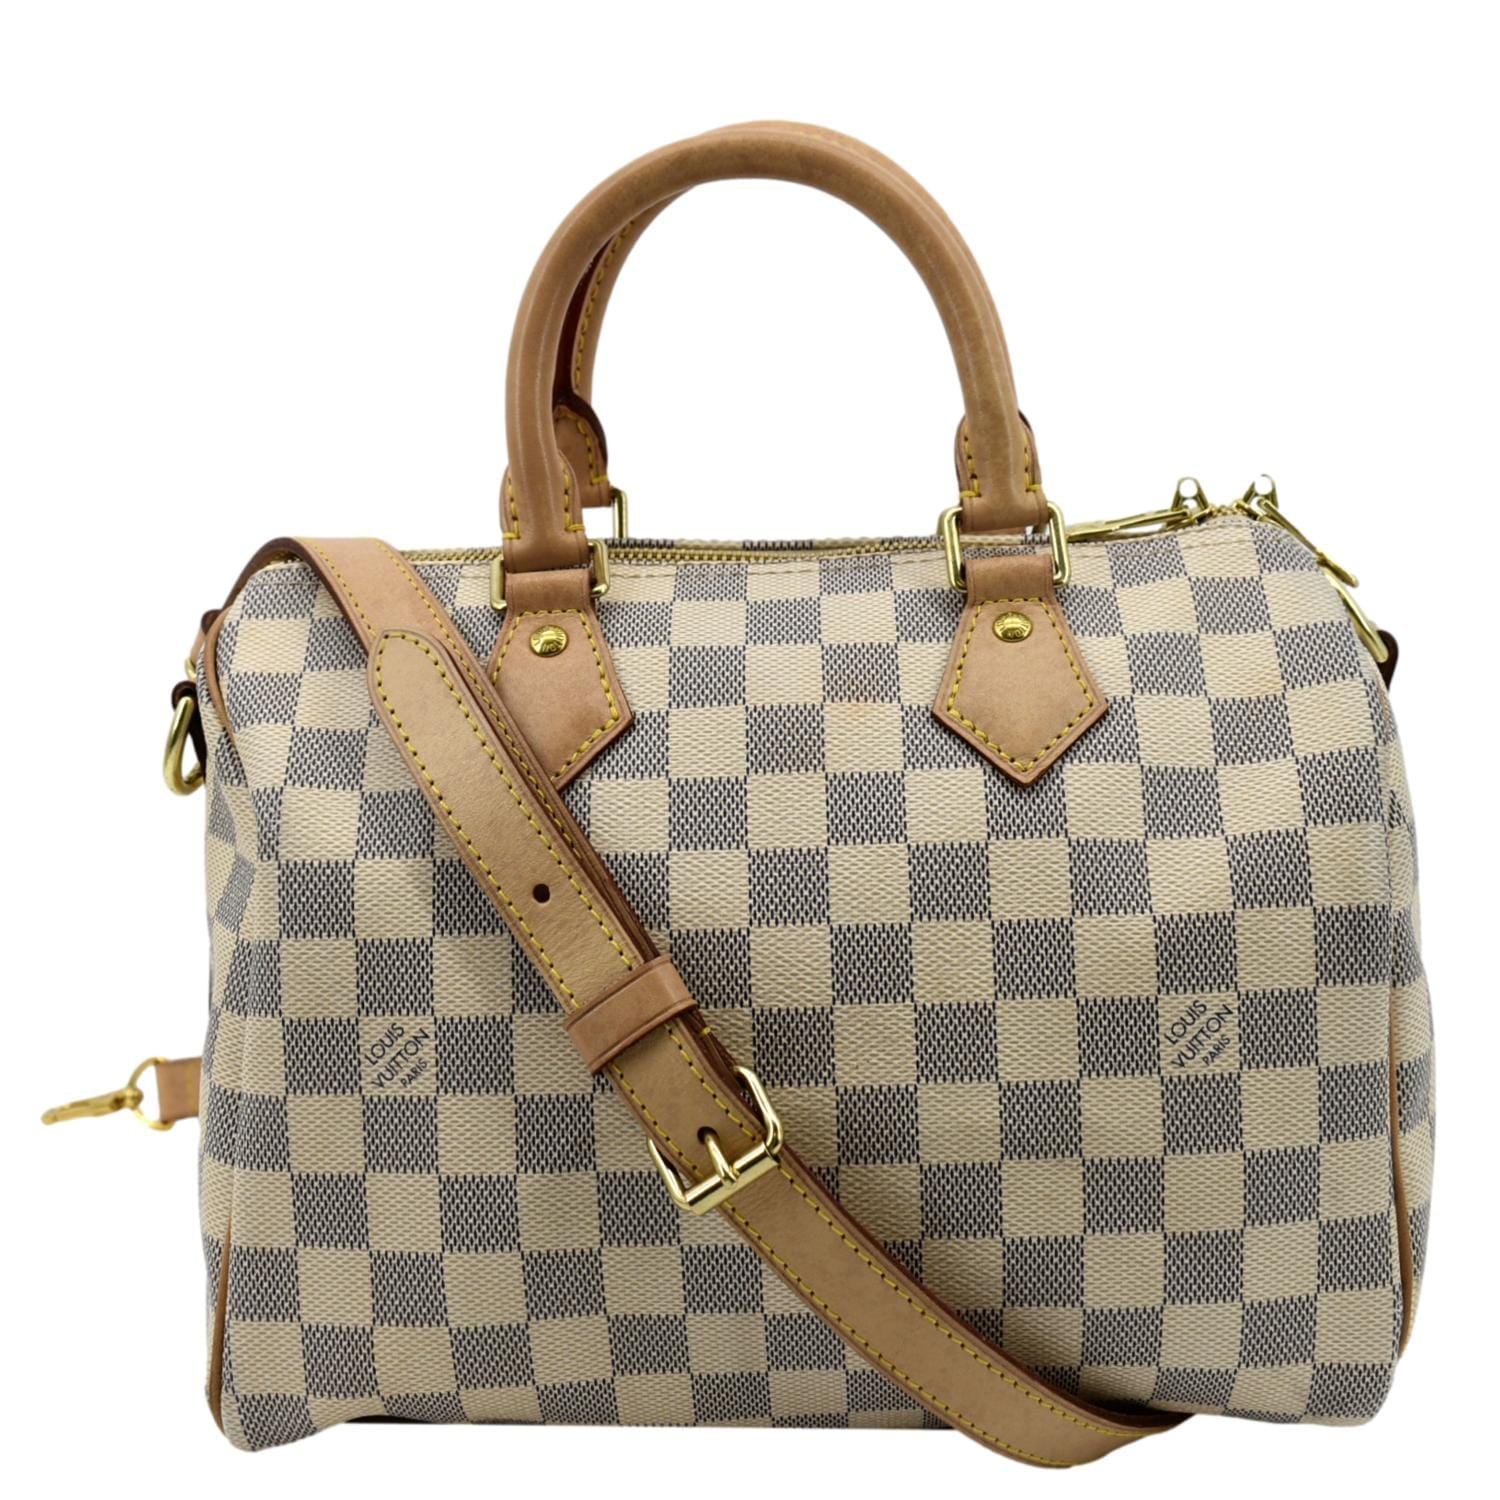 Louis Vuitton Damier Azur Speedy 30 Bandouliere Bag